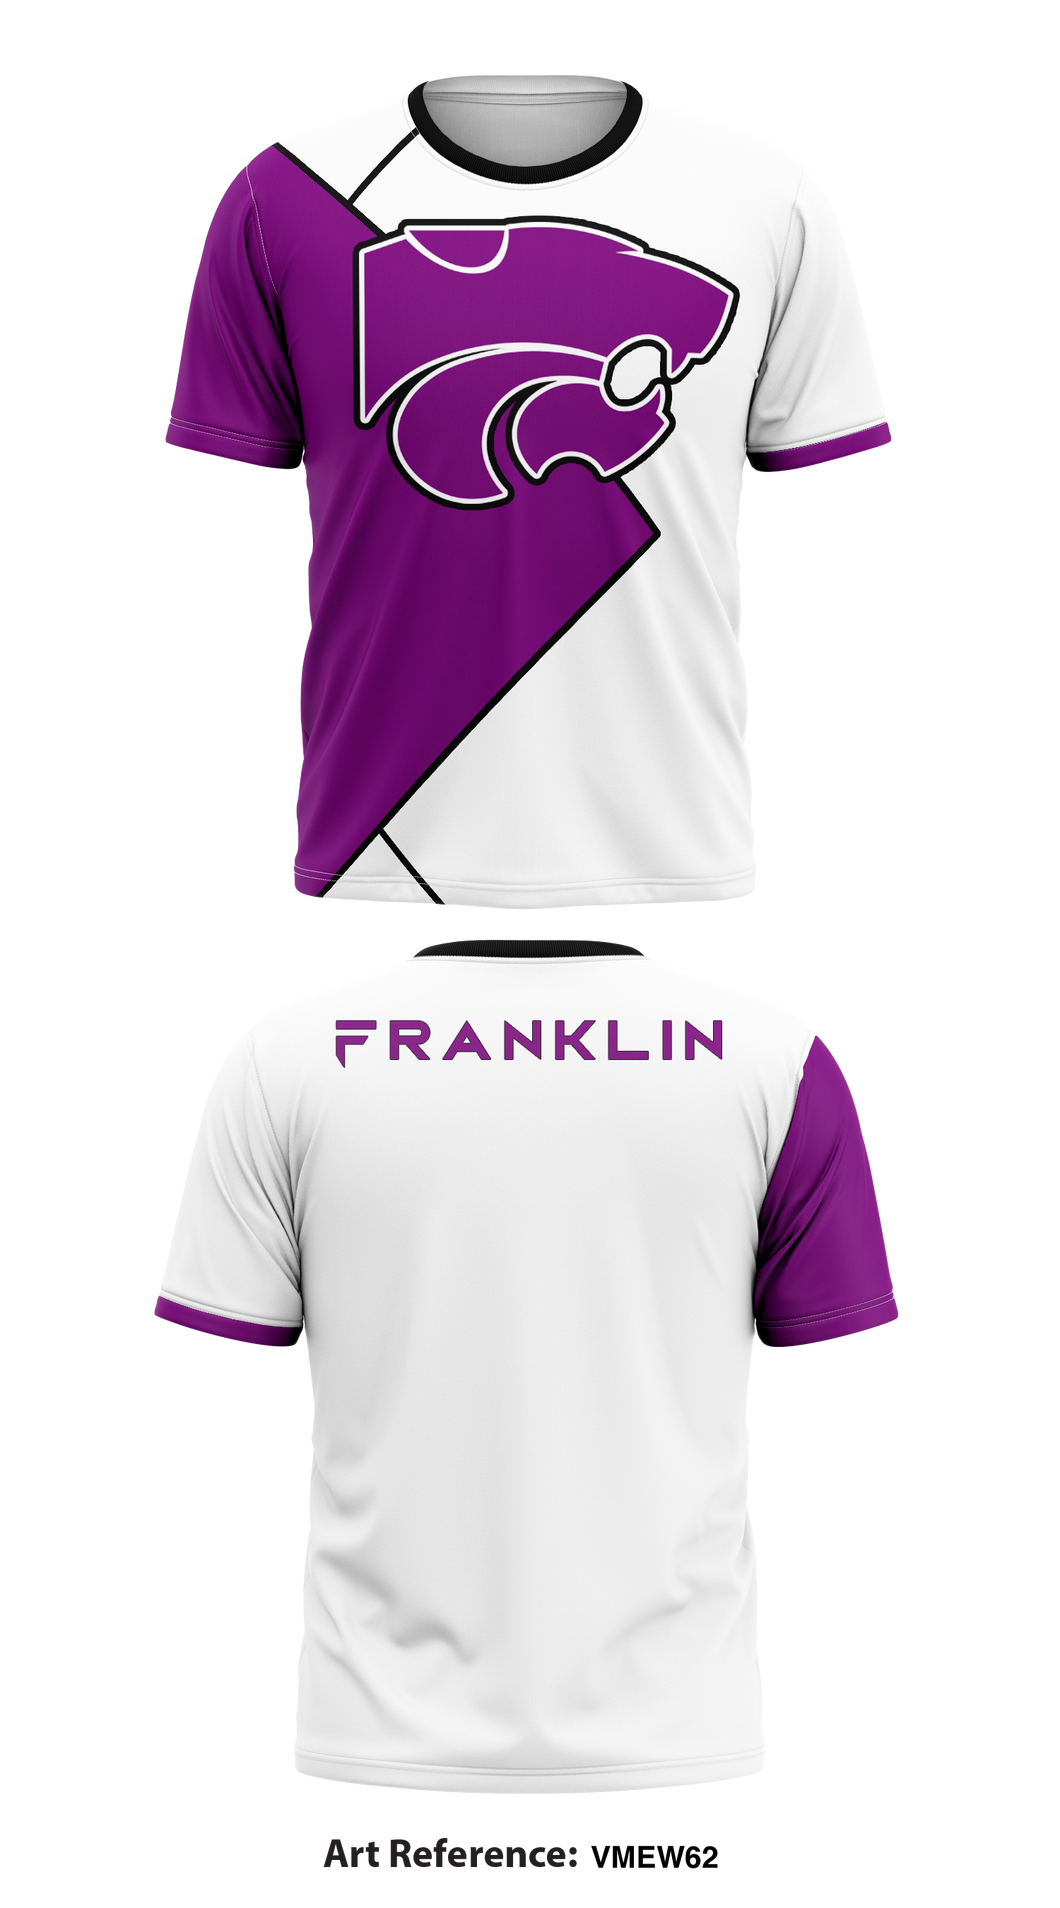 Franklin 36326011 Short Sleeve Performance Shirt - 1